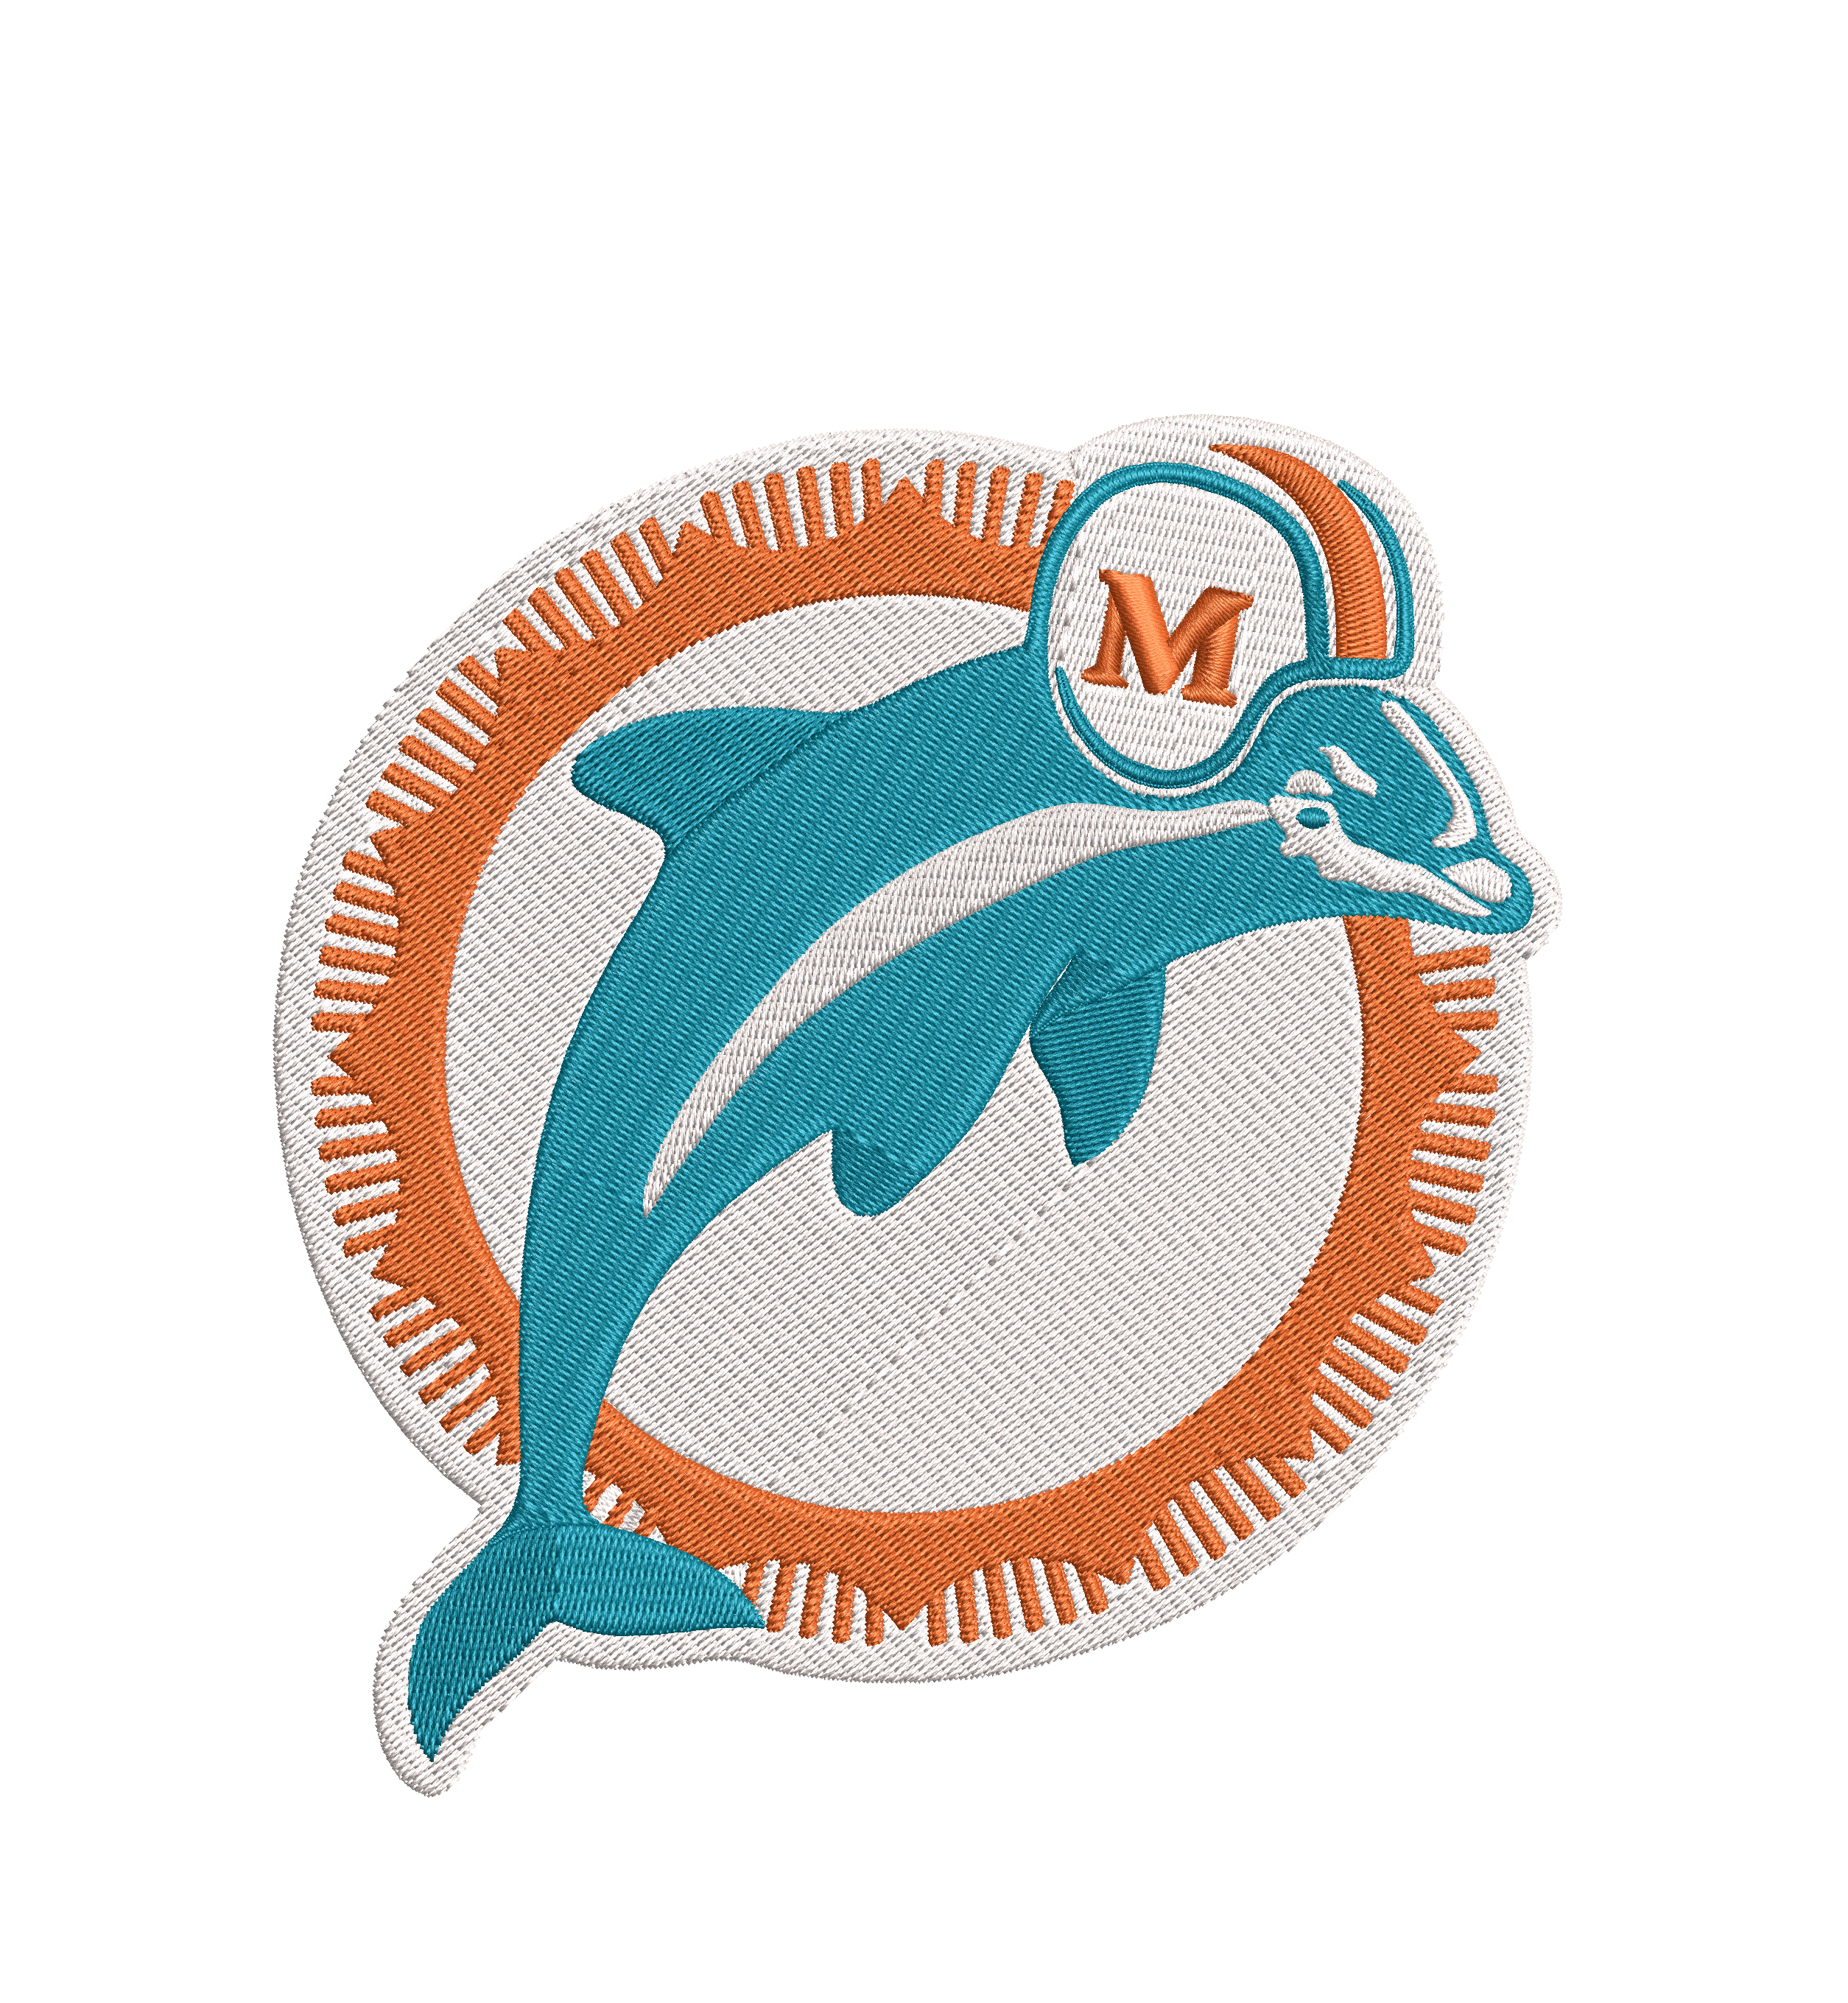 Miami Dolphins 3 : Embroidery Design